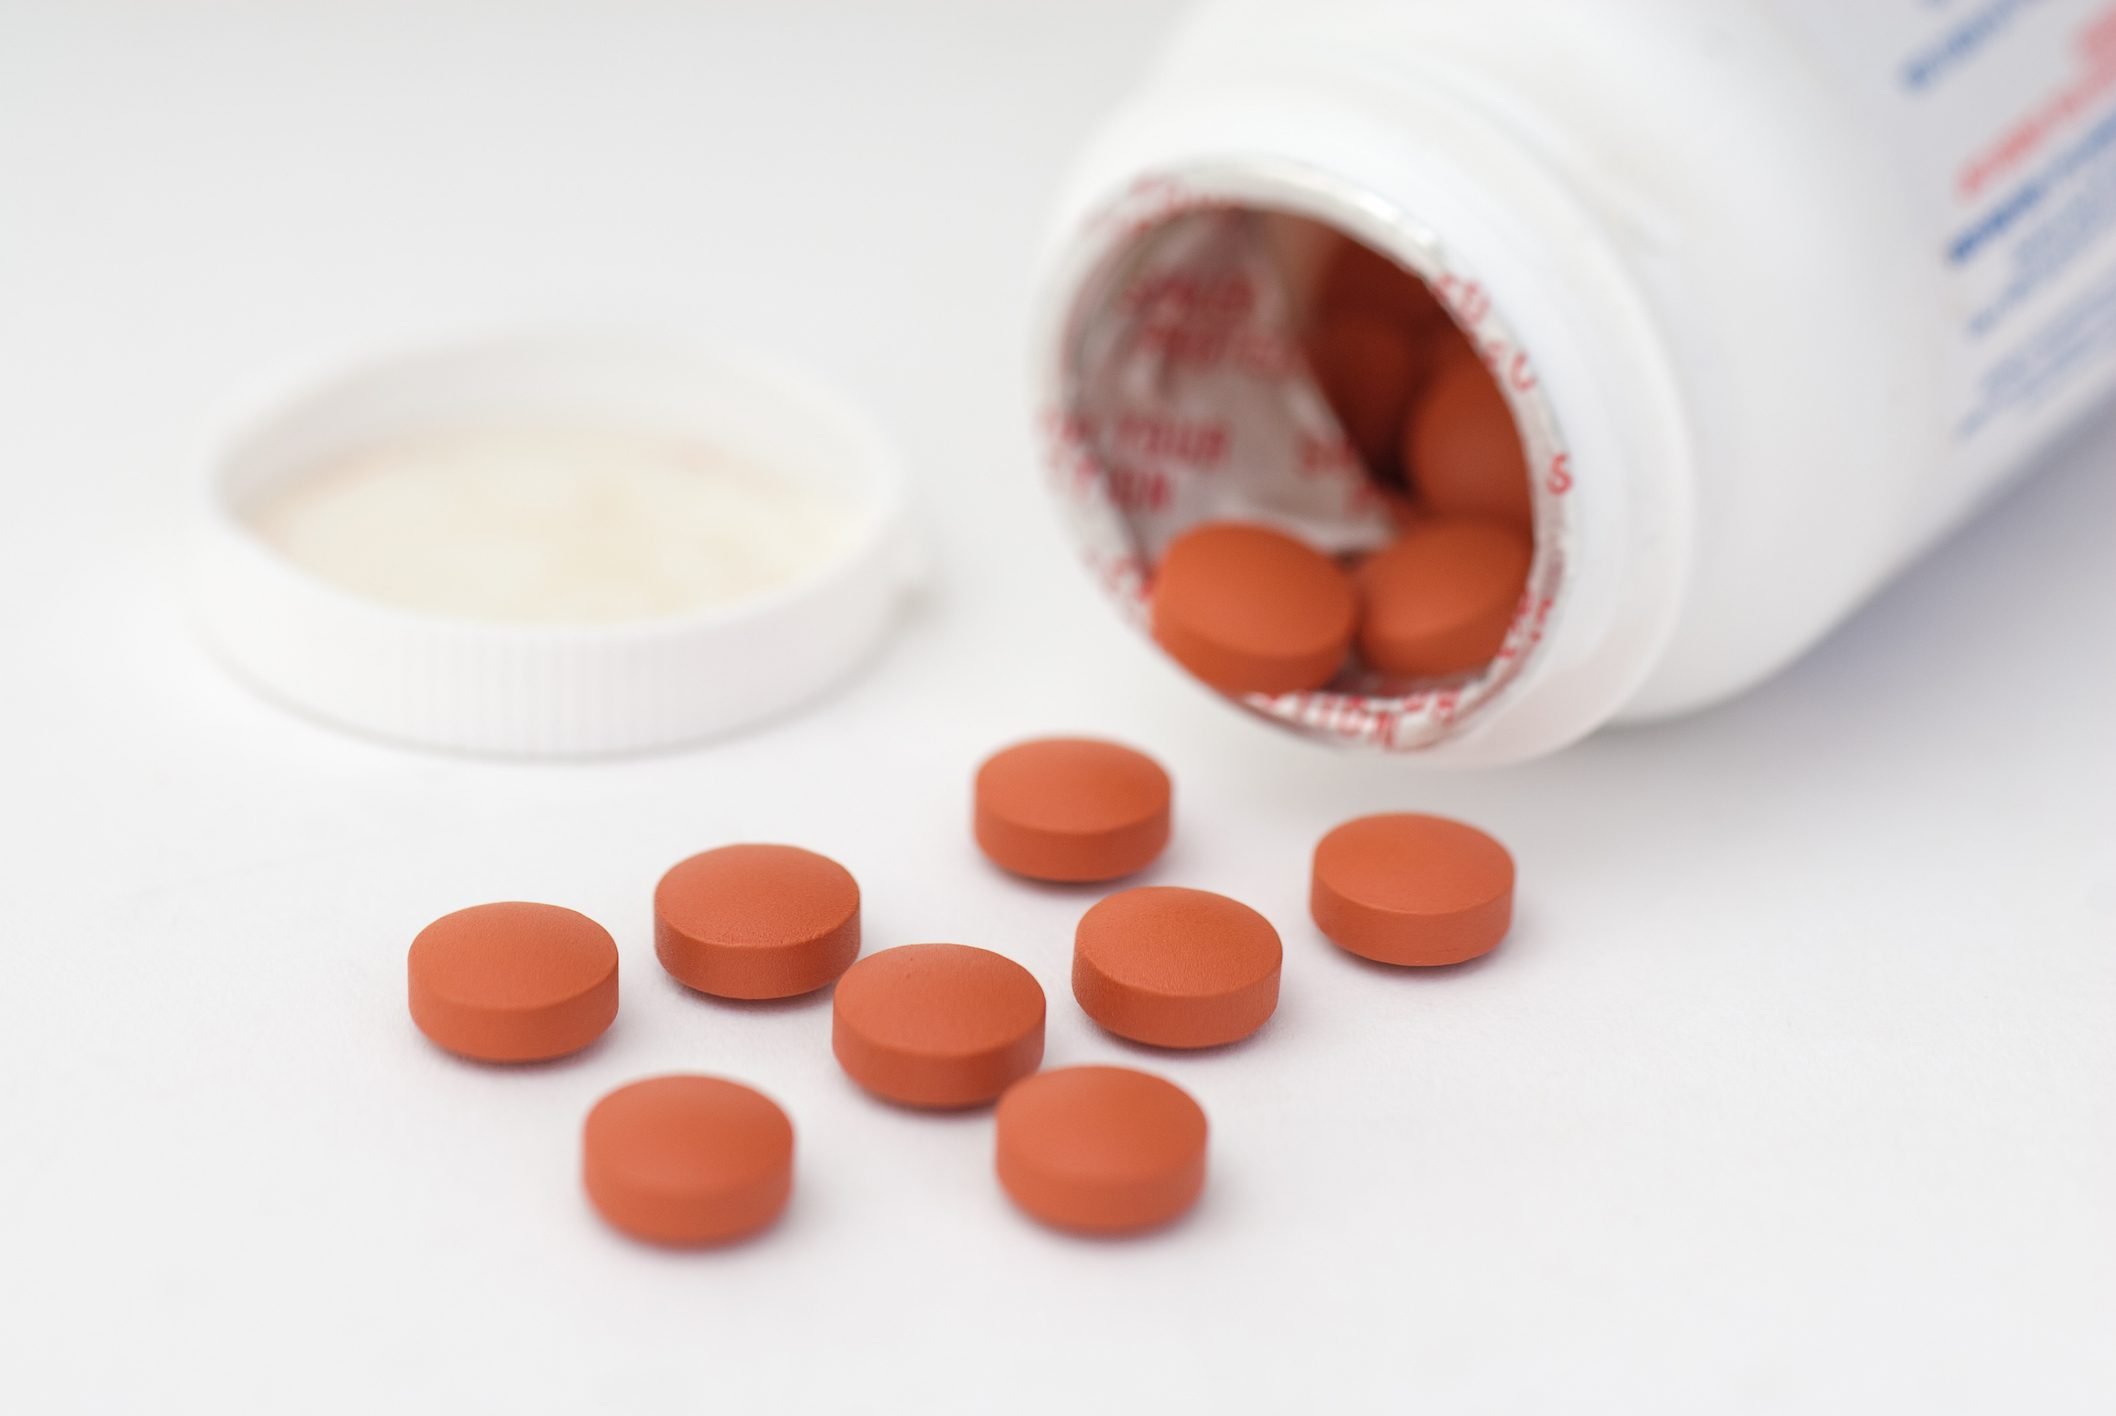 Should I Avoid Ibuprofen for COVID-19 Fever?